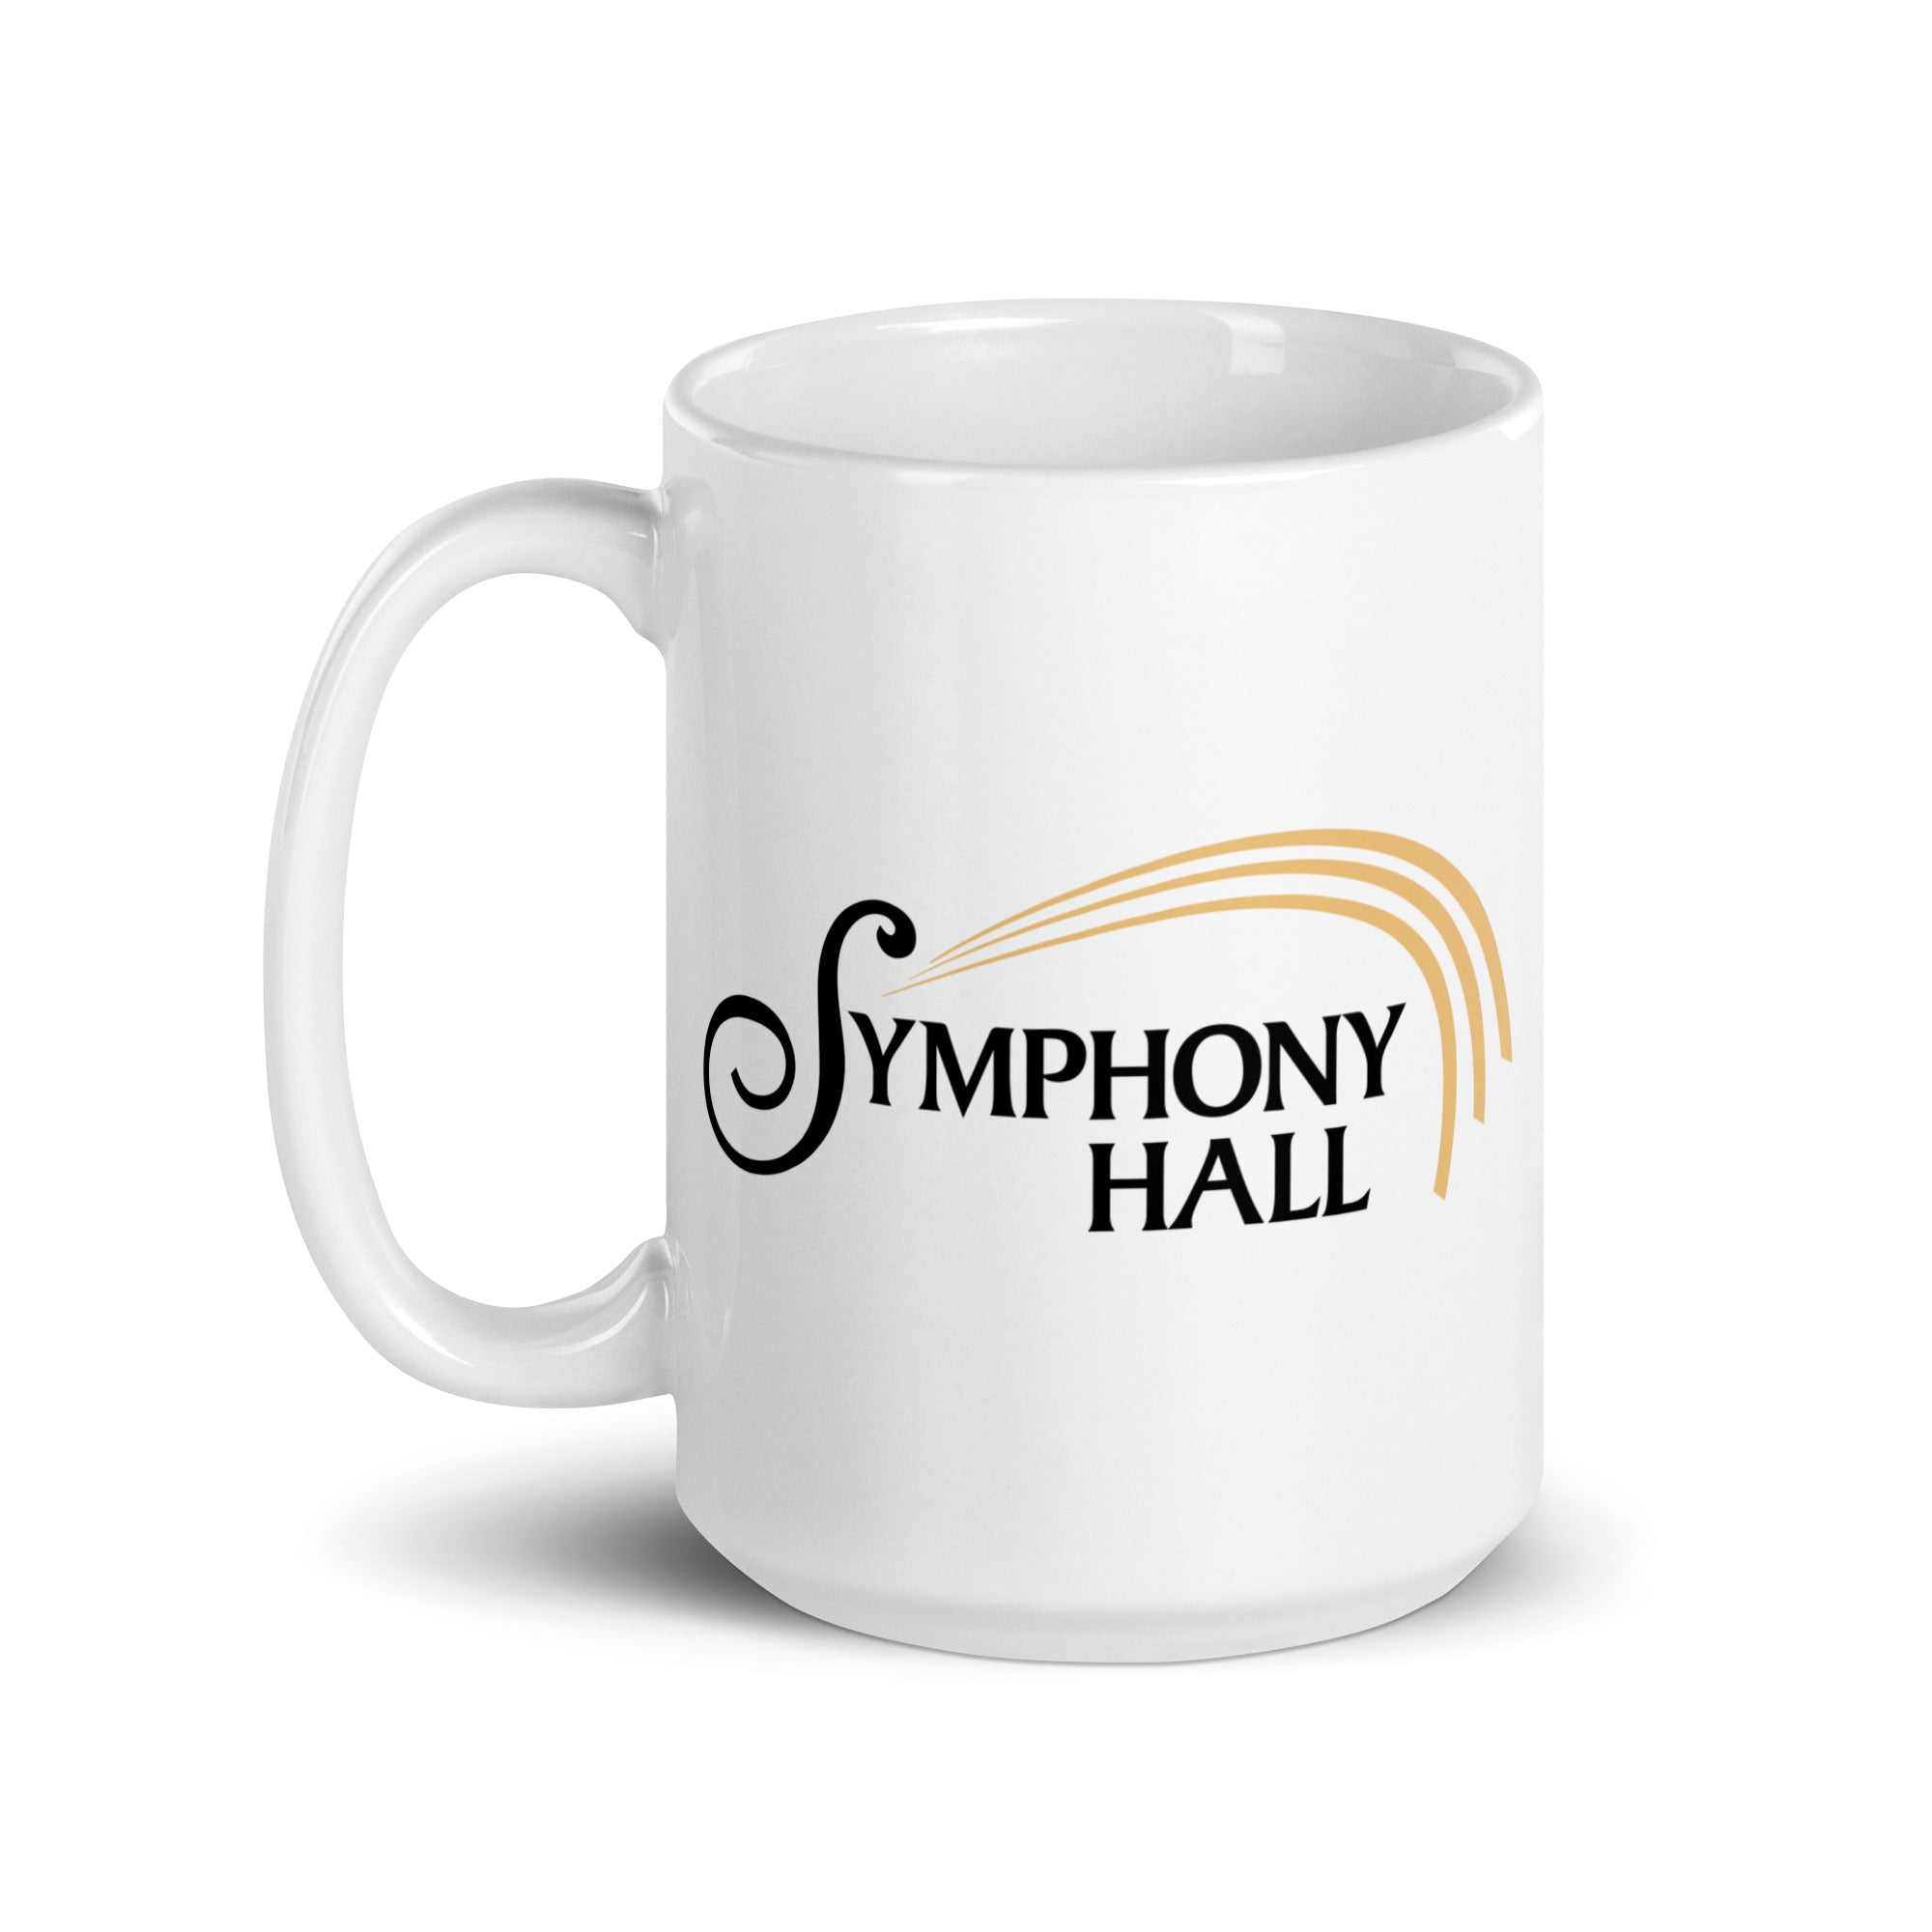 Symphony Hall: Mug